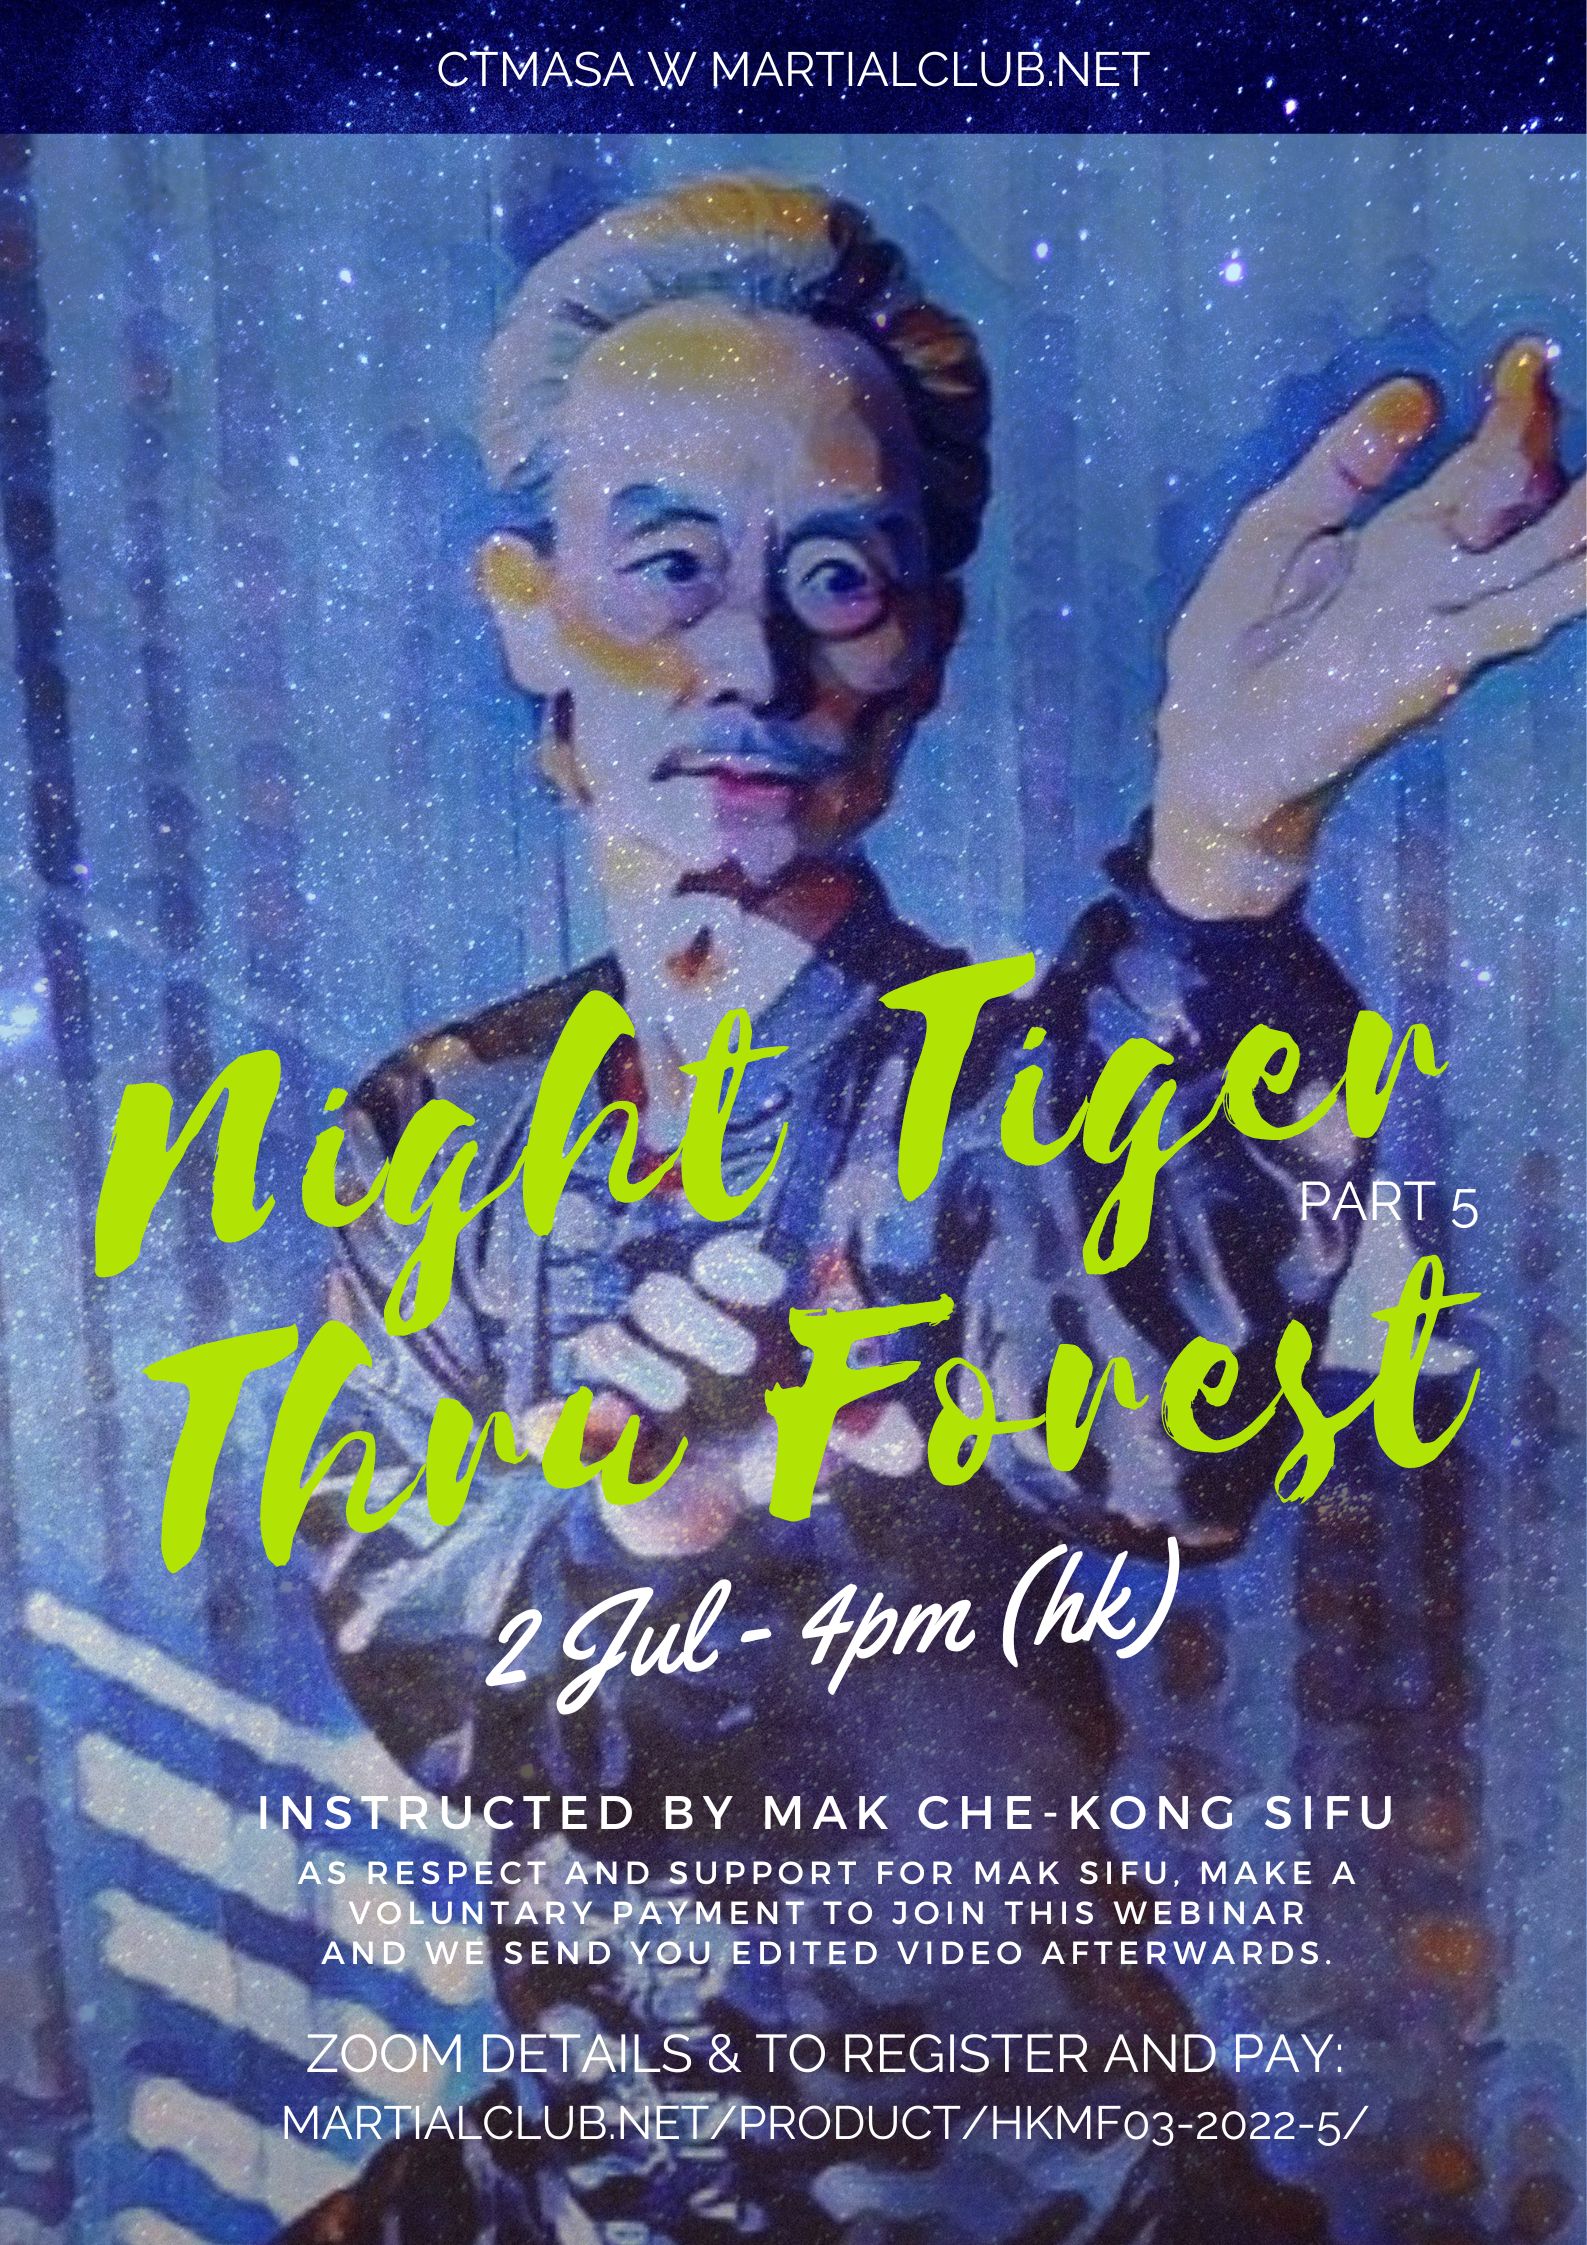 Night Tiger Through Forest Part 5